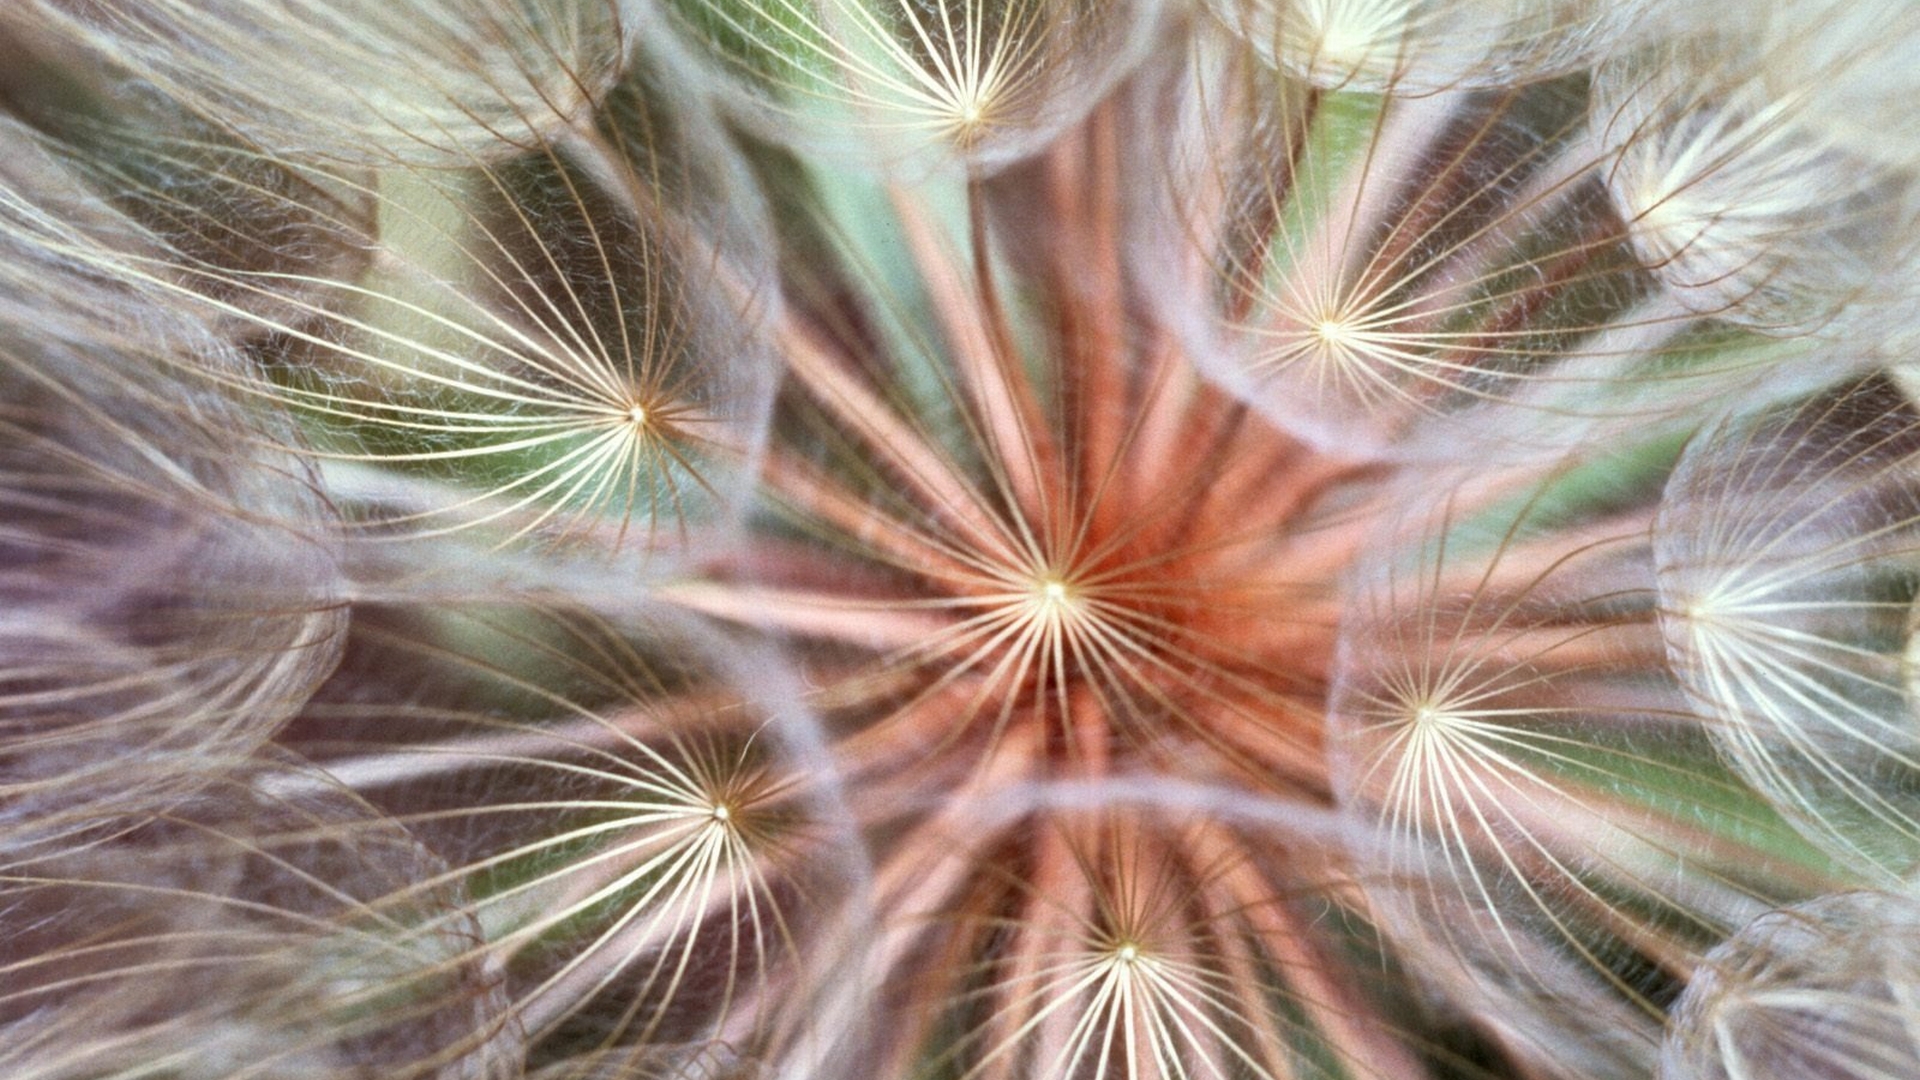 Desktop wallpaper featuring a close-up of a beautiful dandelion flower in nature.